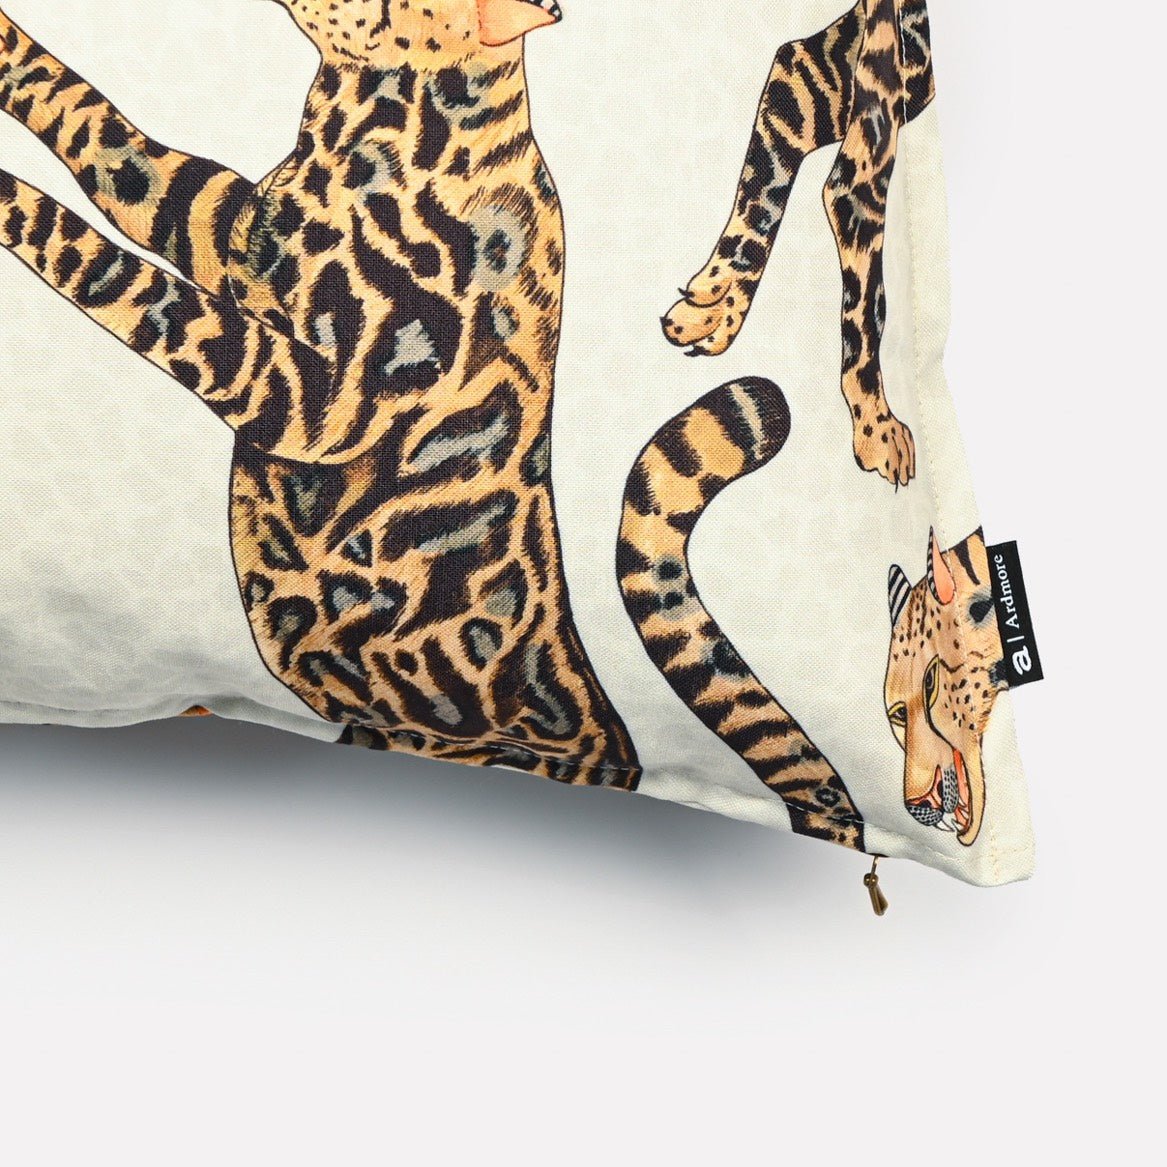 Cheetah King Stone Outdoor Cushion Cover